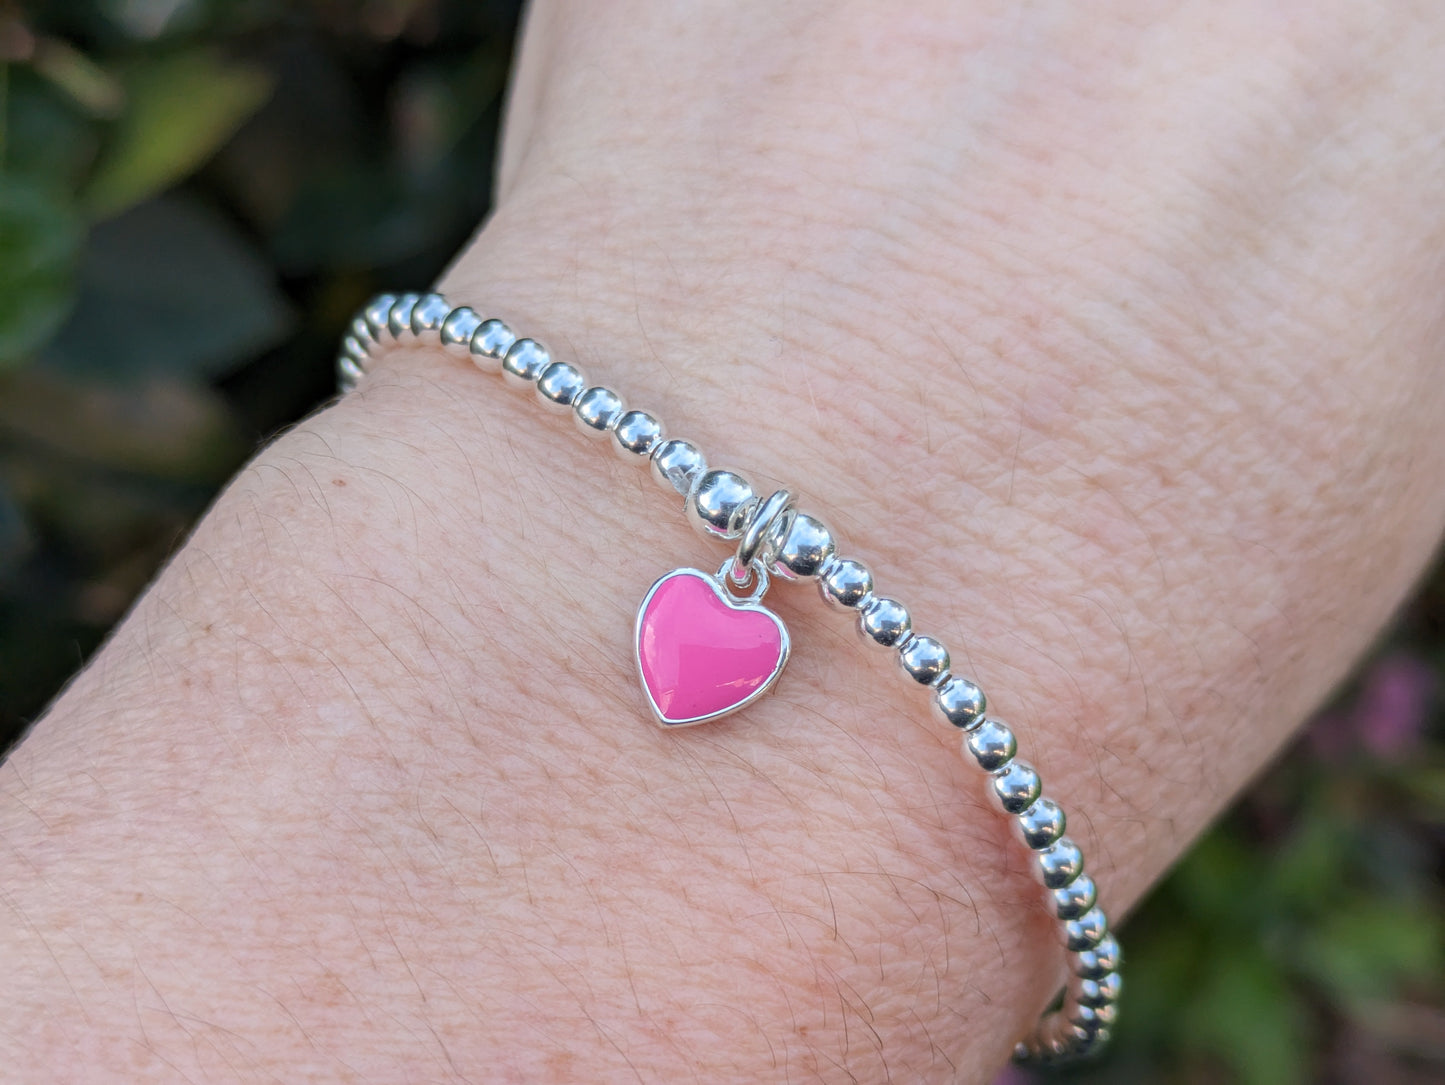 Girlfriend bracelet. Pink charm bracelet.